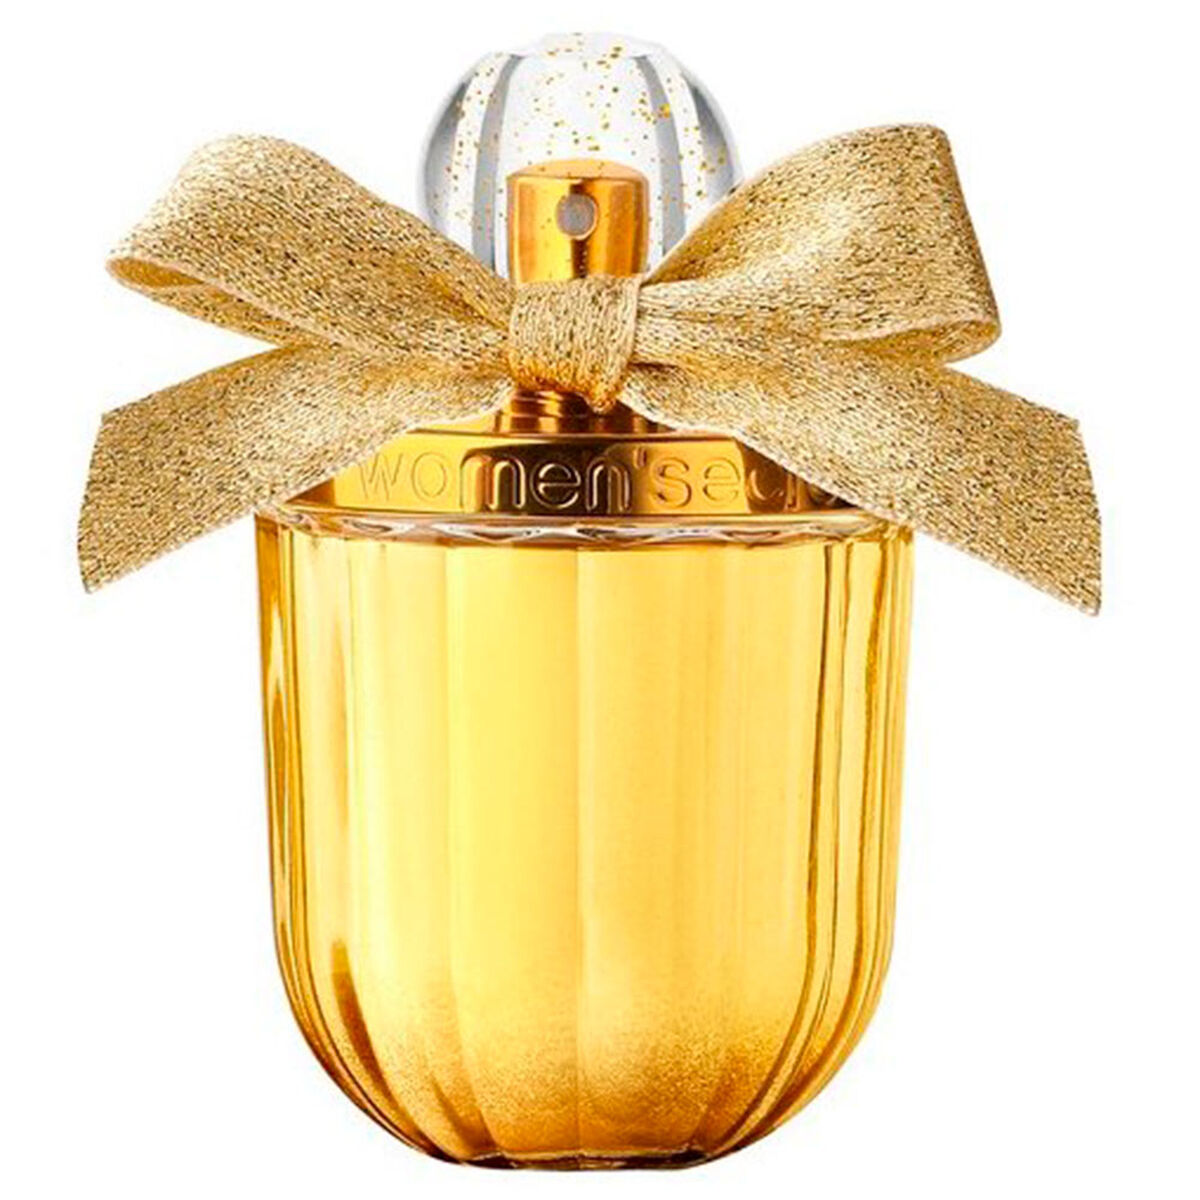 Perfume Women Secret Gold Seduction Edp 100 ml